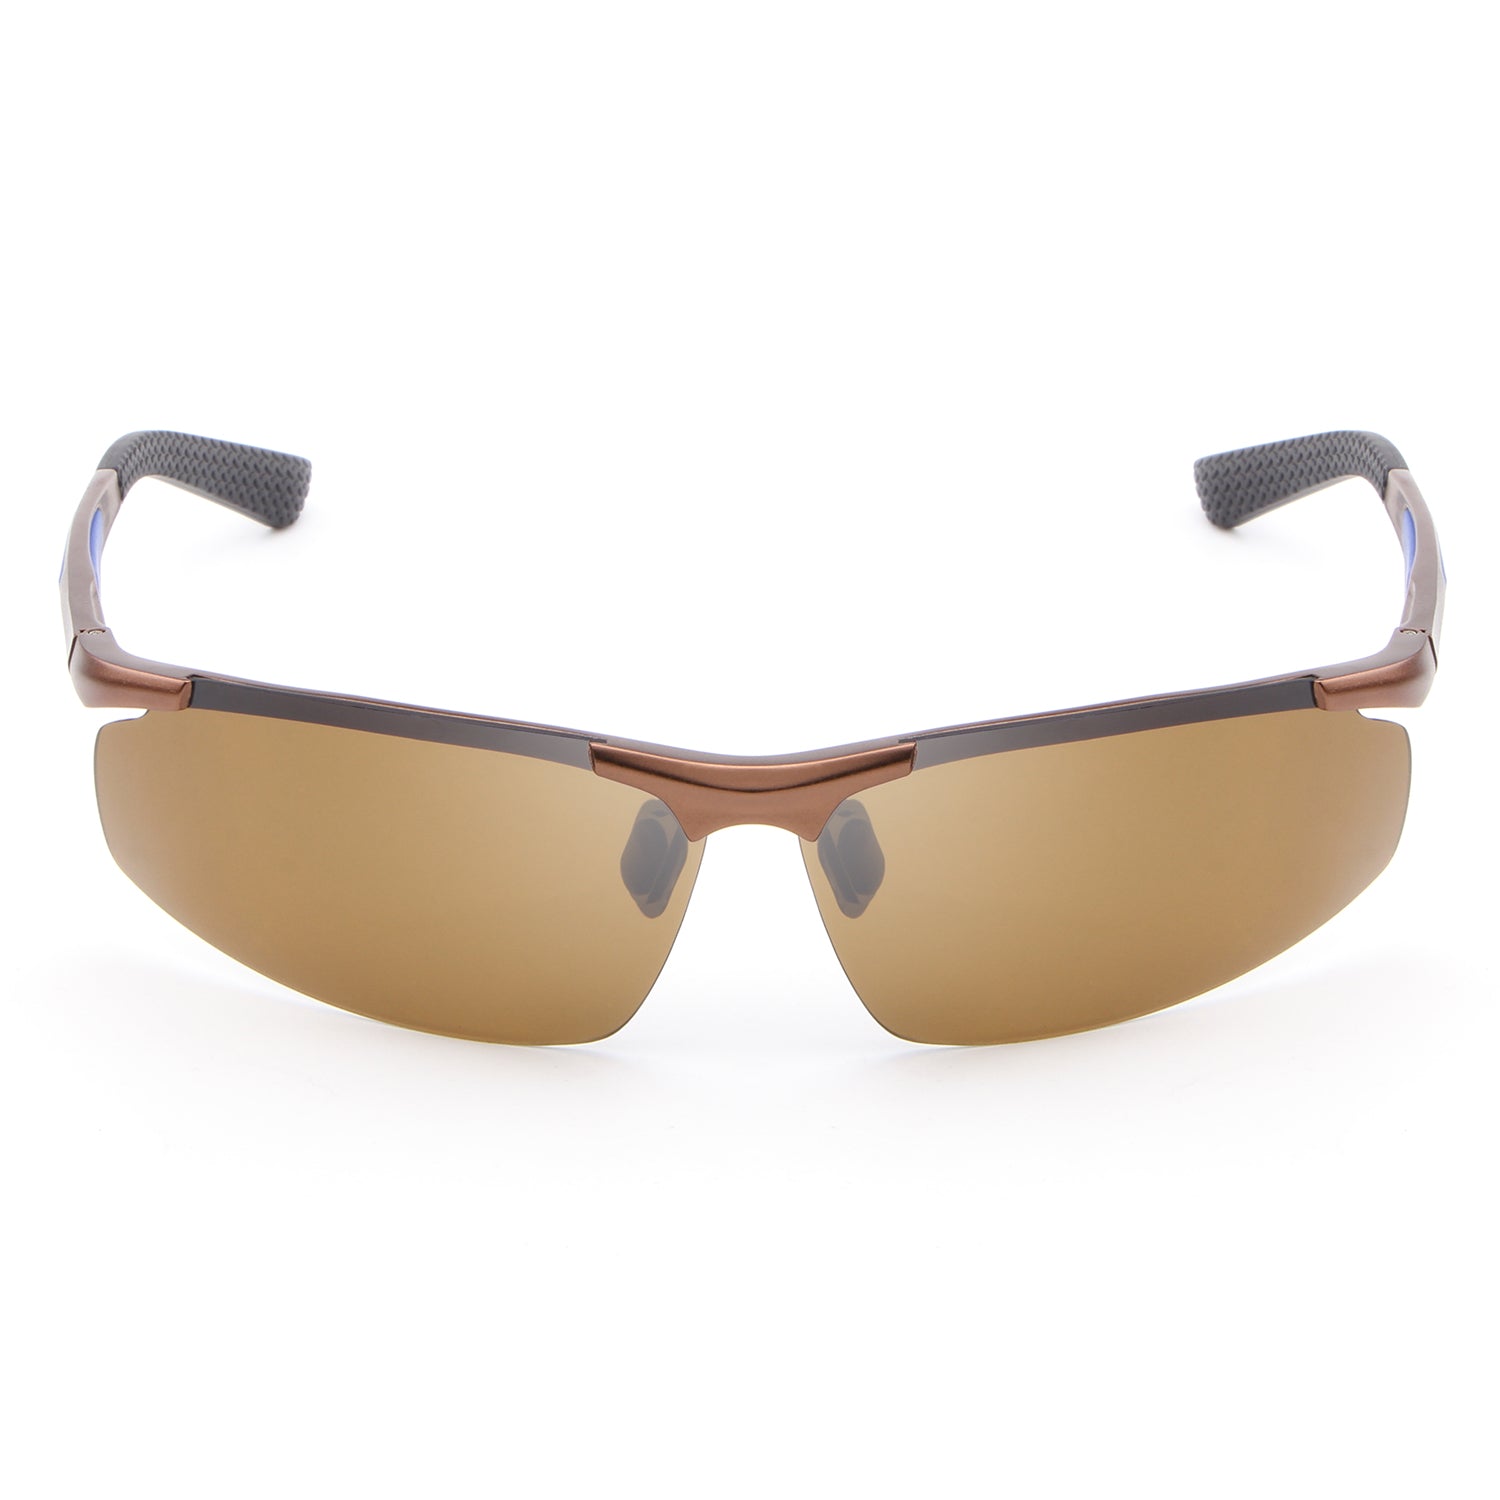 Sports Polarized Sunglasses Running Baseball Cycling Fishing Glasses Durable Frame